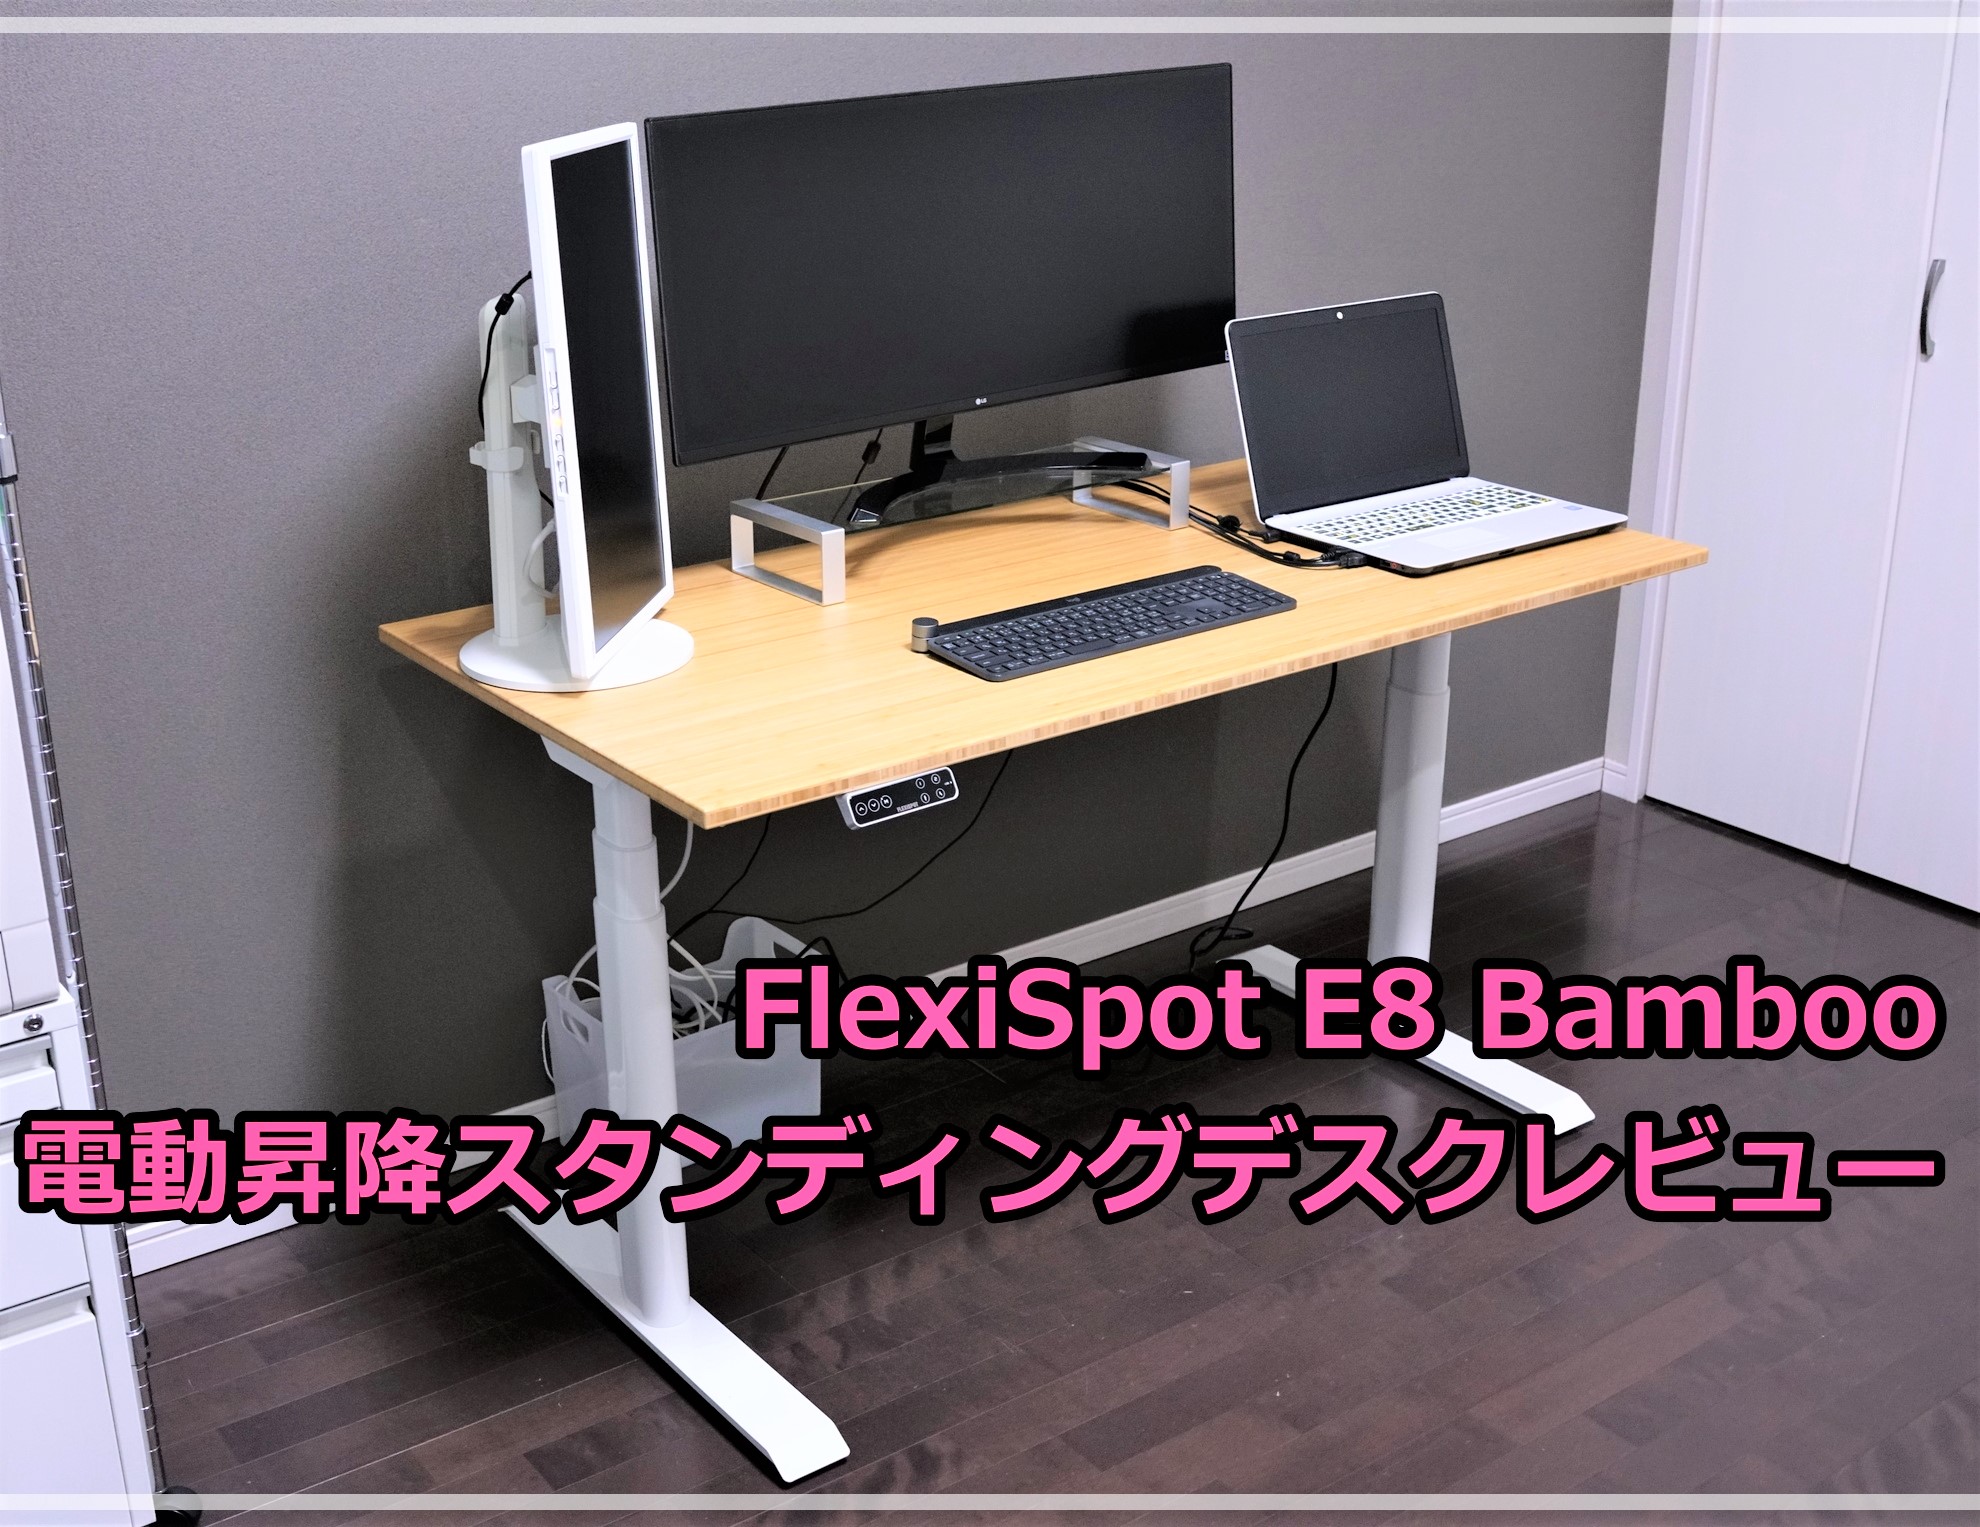 FLEXISPOT E8 電動昇降スタンディングデスクレビュー | ガジェットフリーク